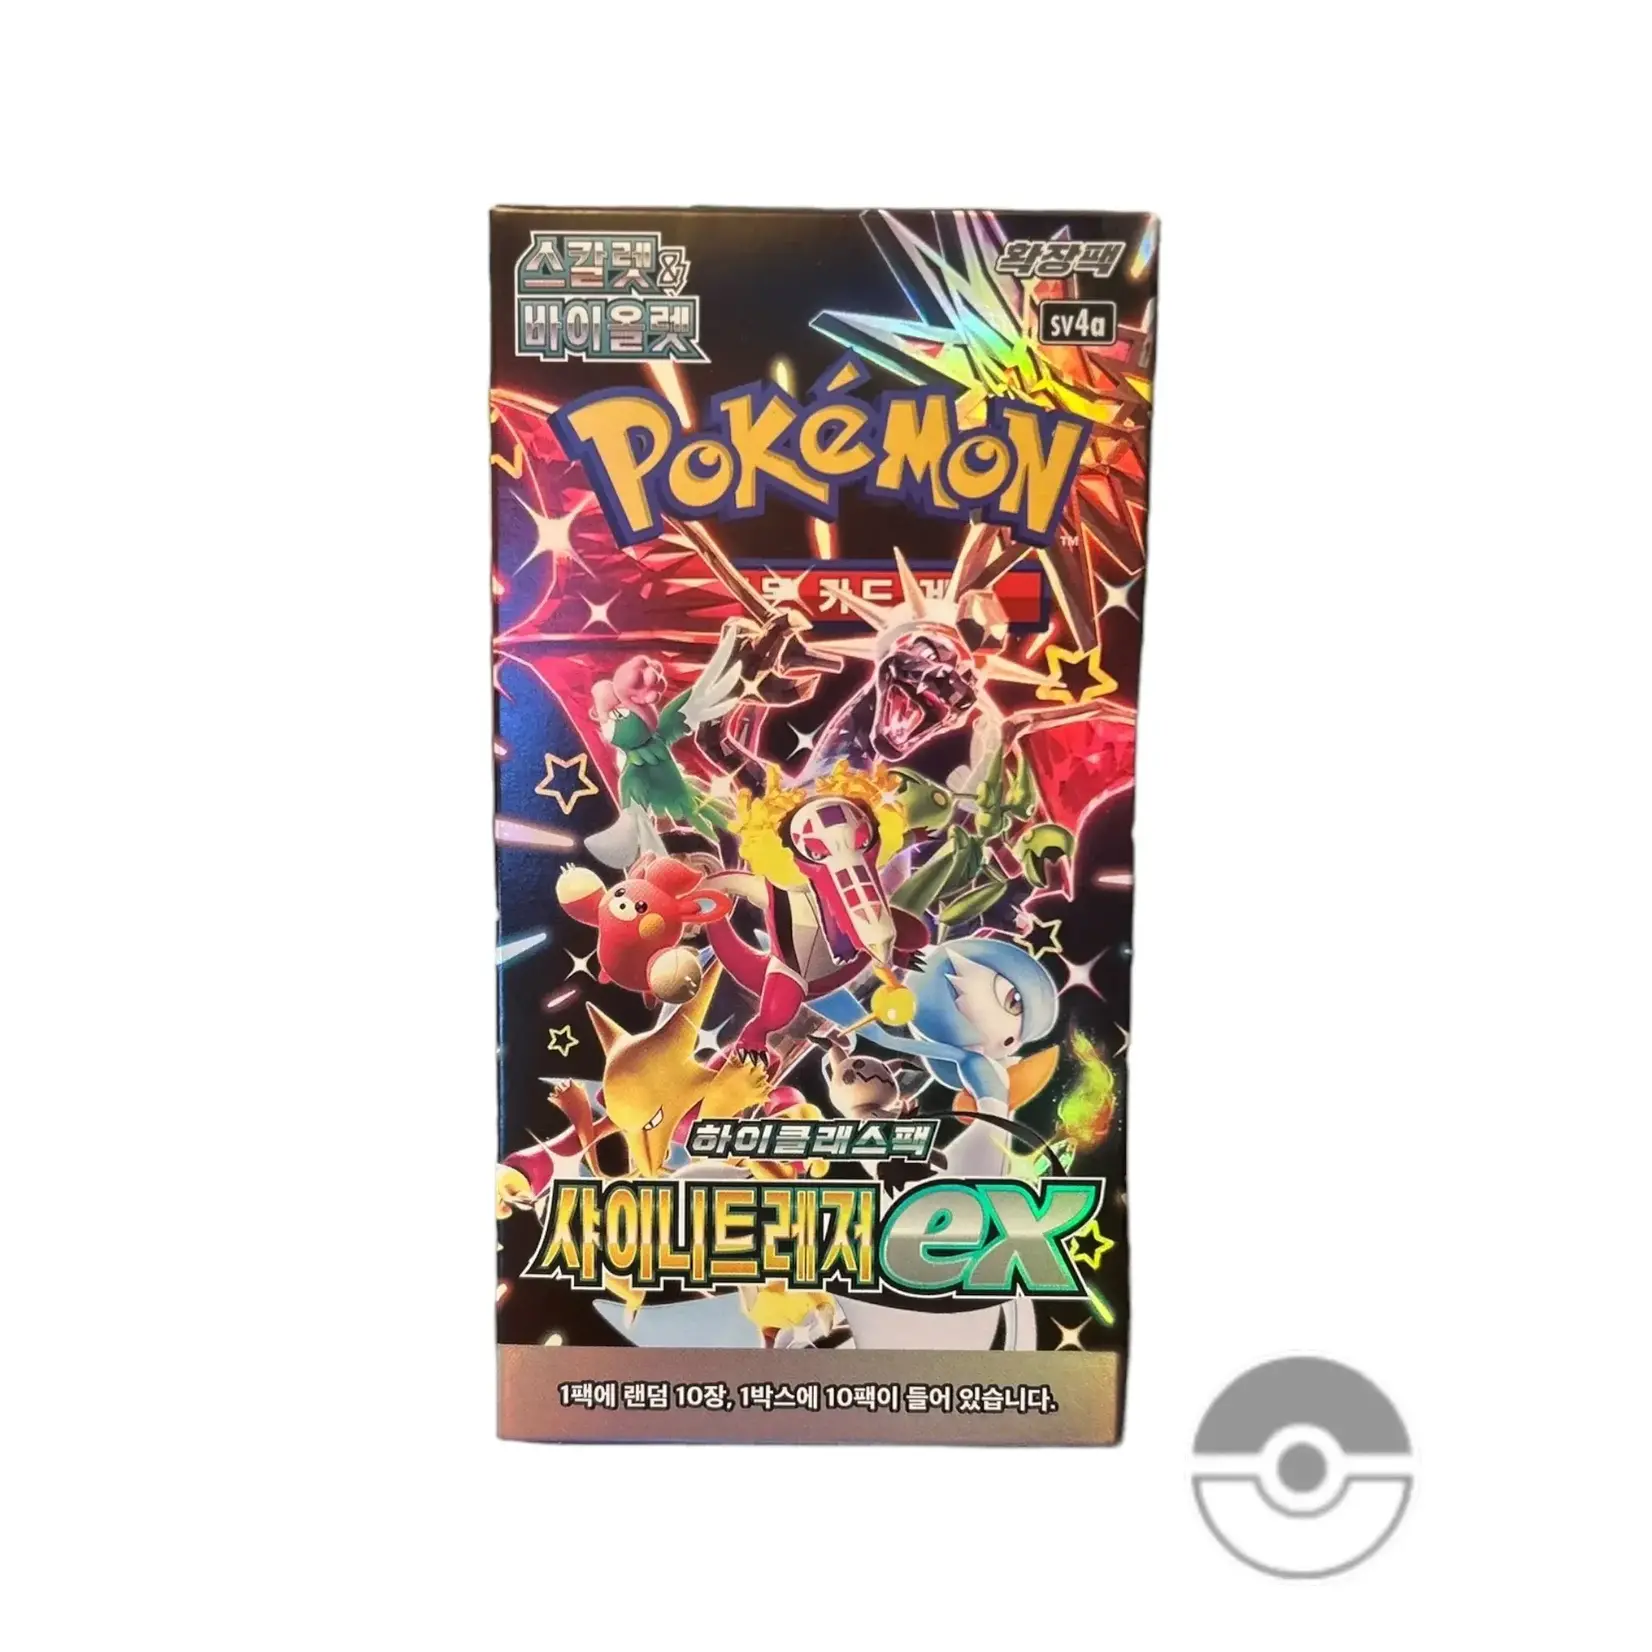 Pokémon Pokemon shiny treasure ex kr boosterpack